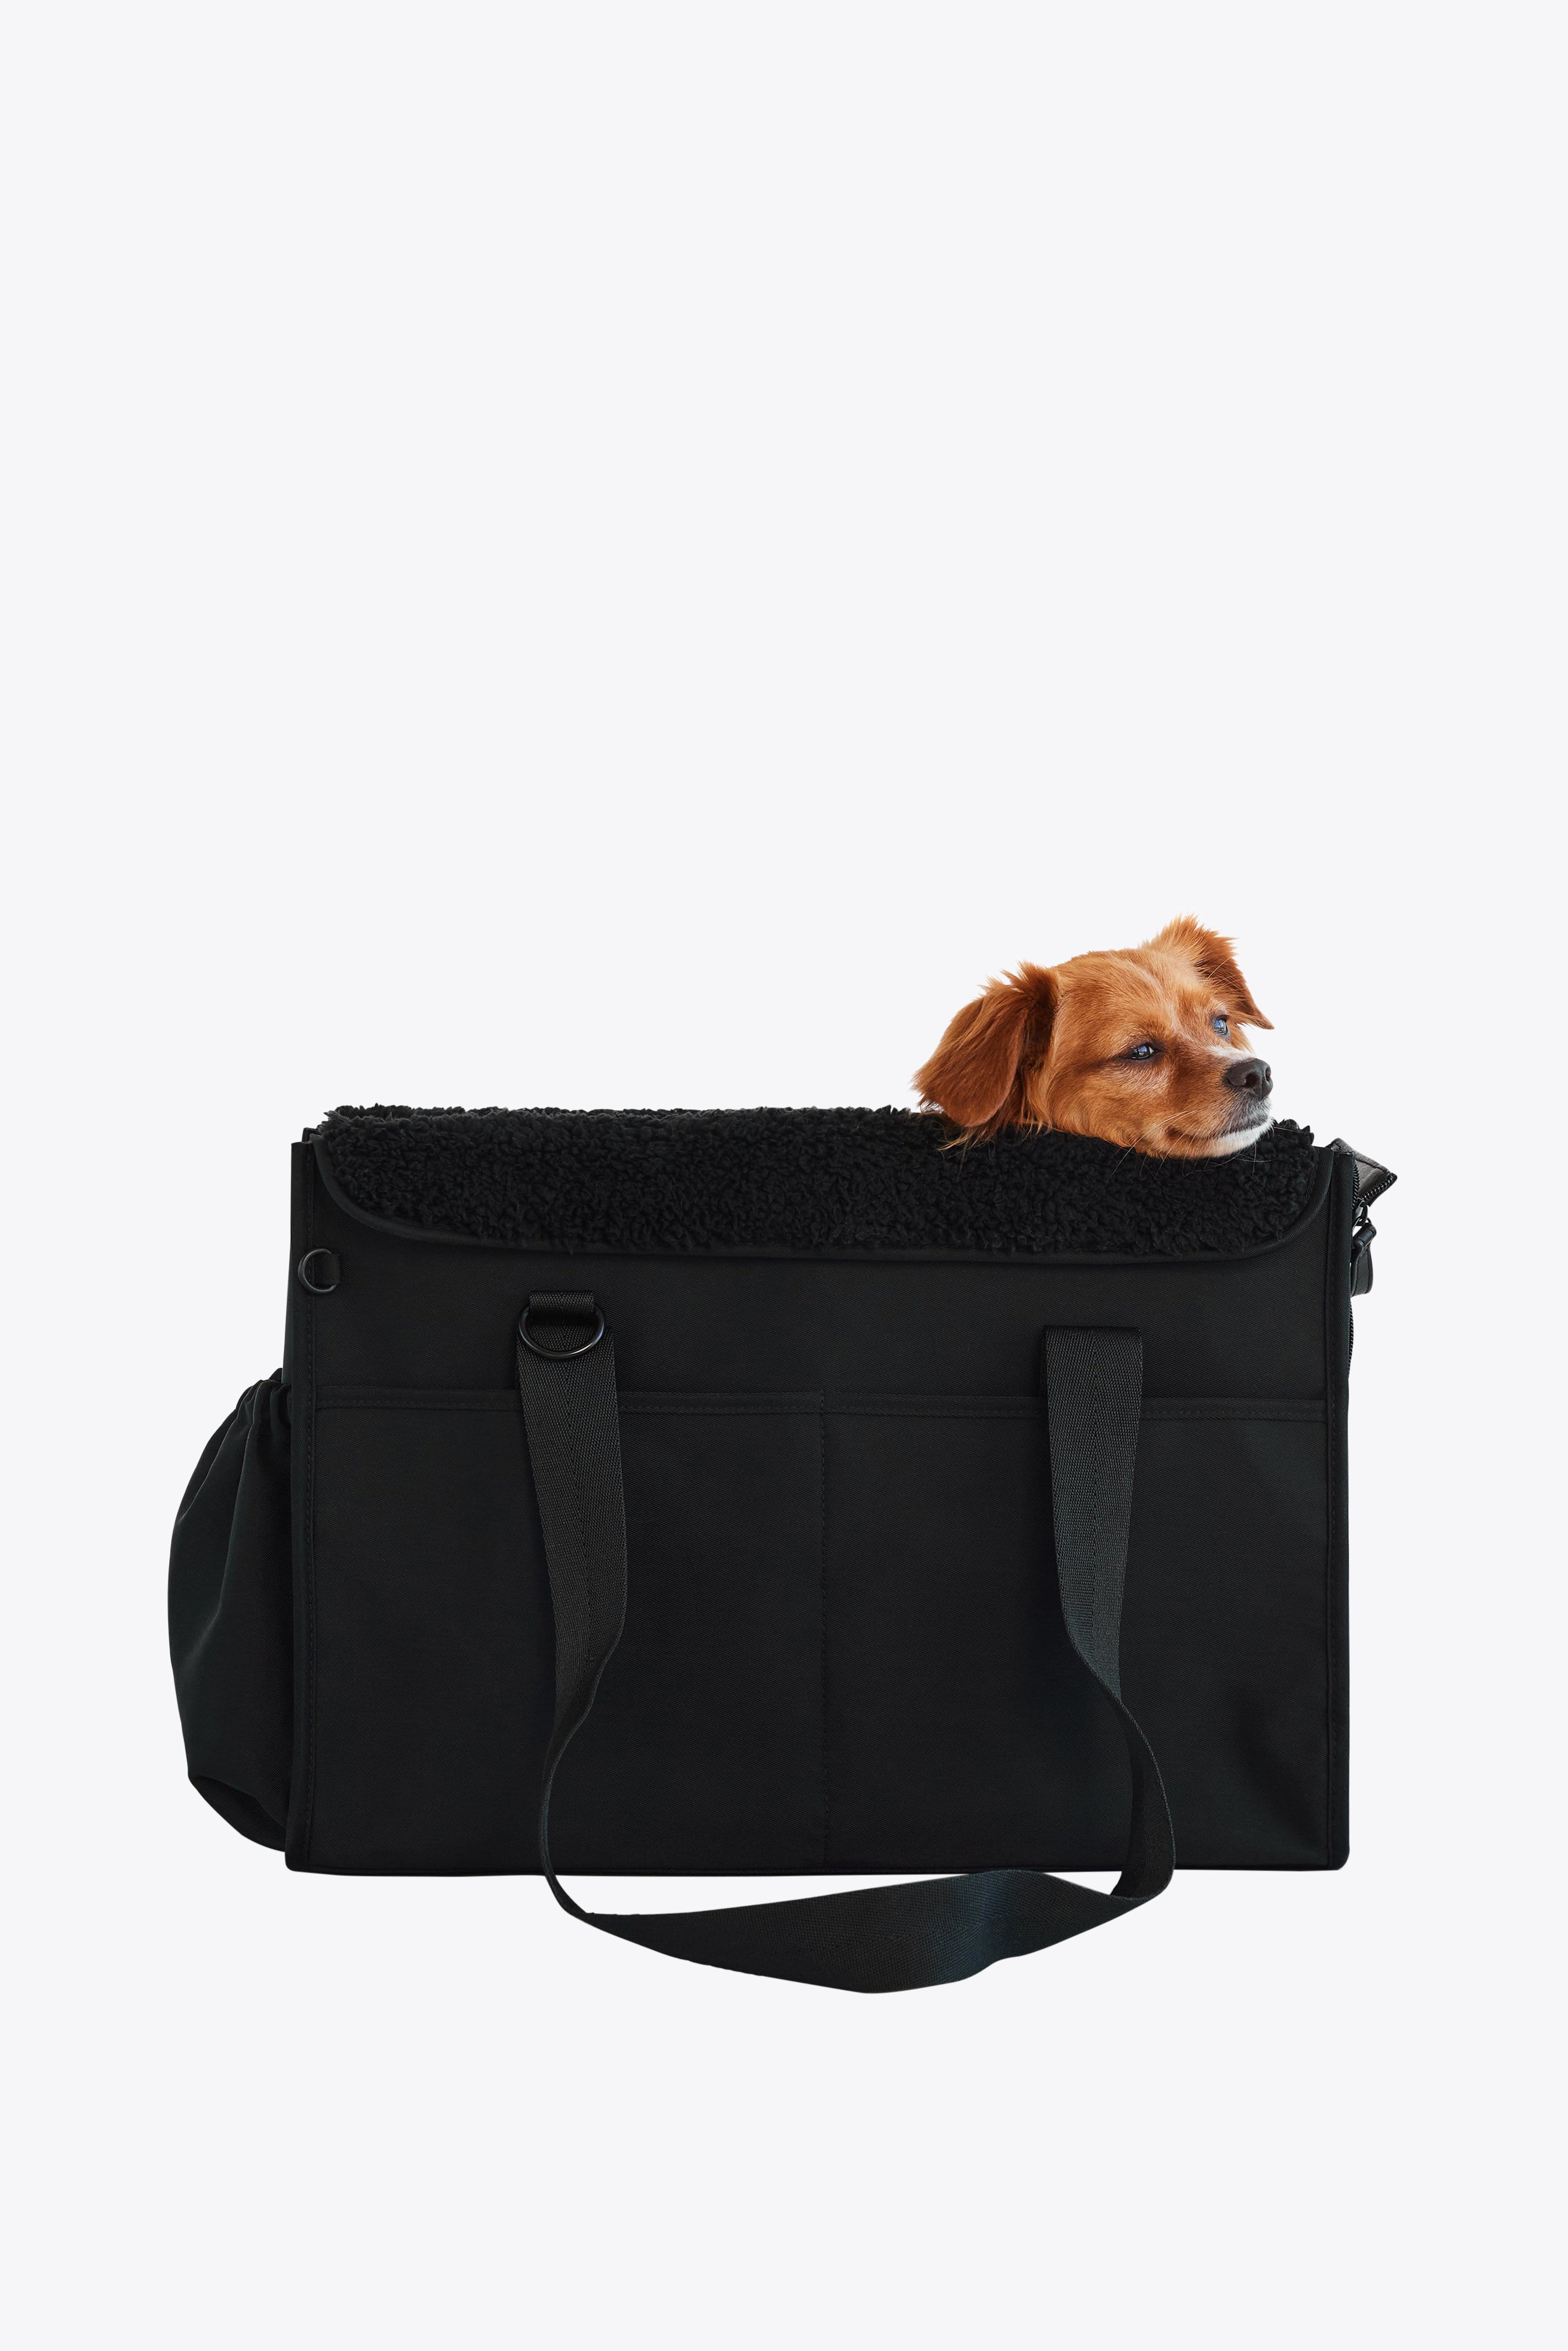 Dog Bag Pet Carrier | Pop-up Fabric Pet Kennel